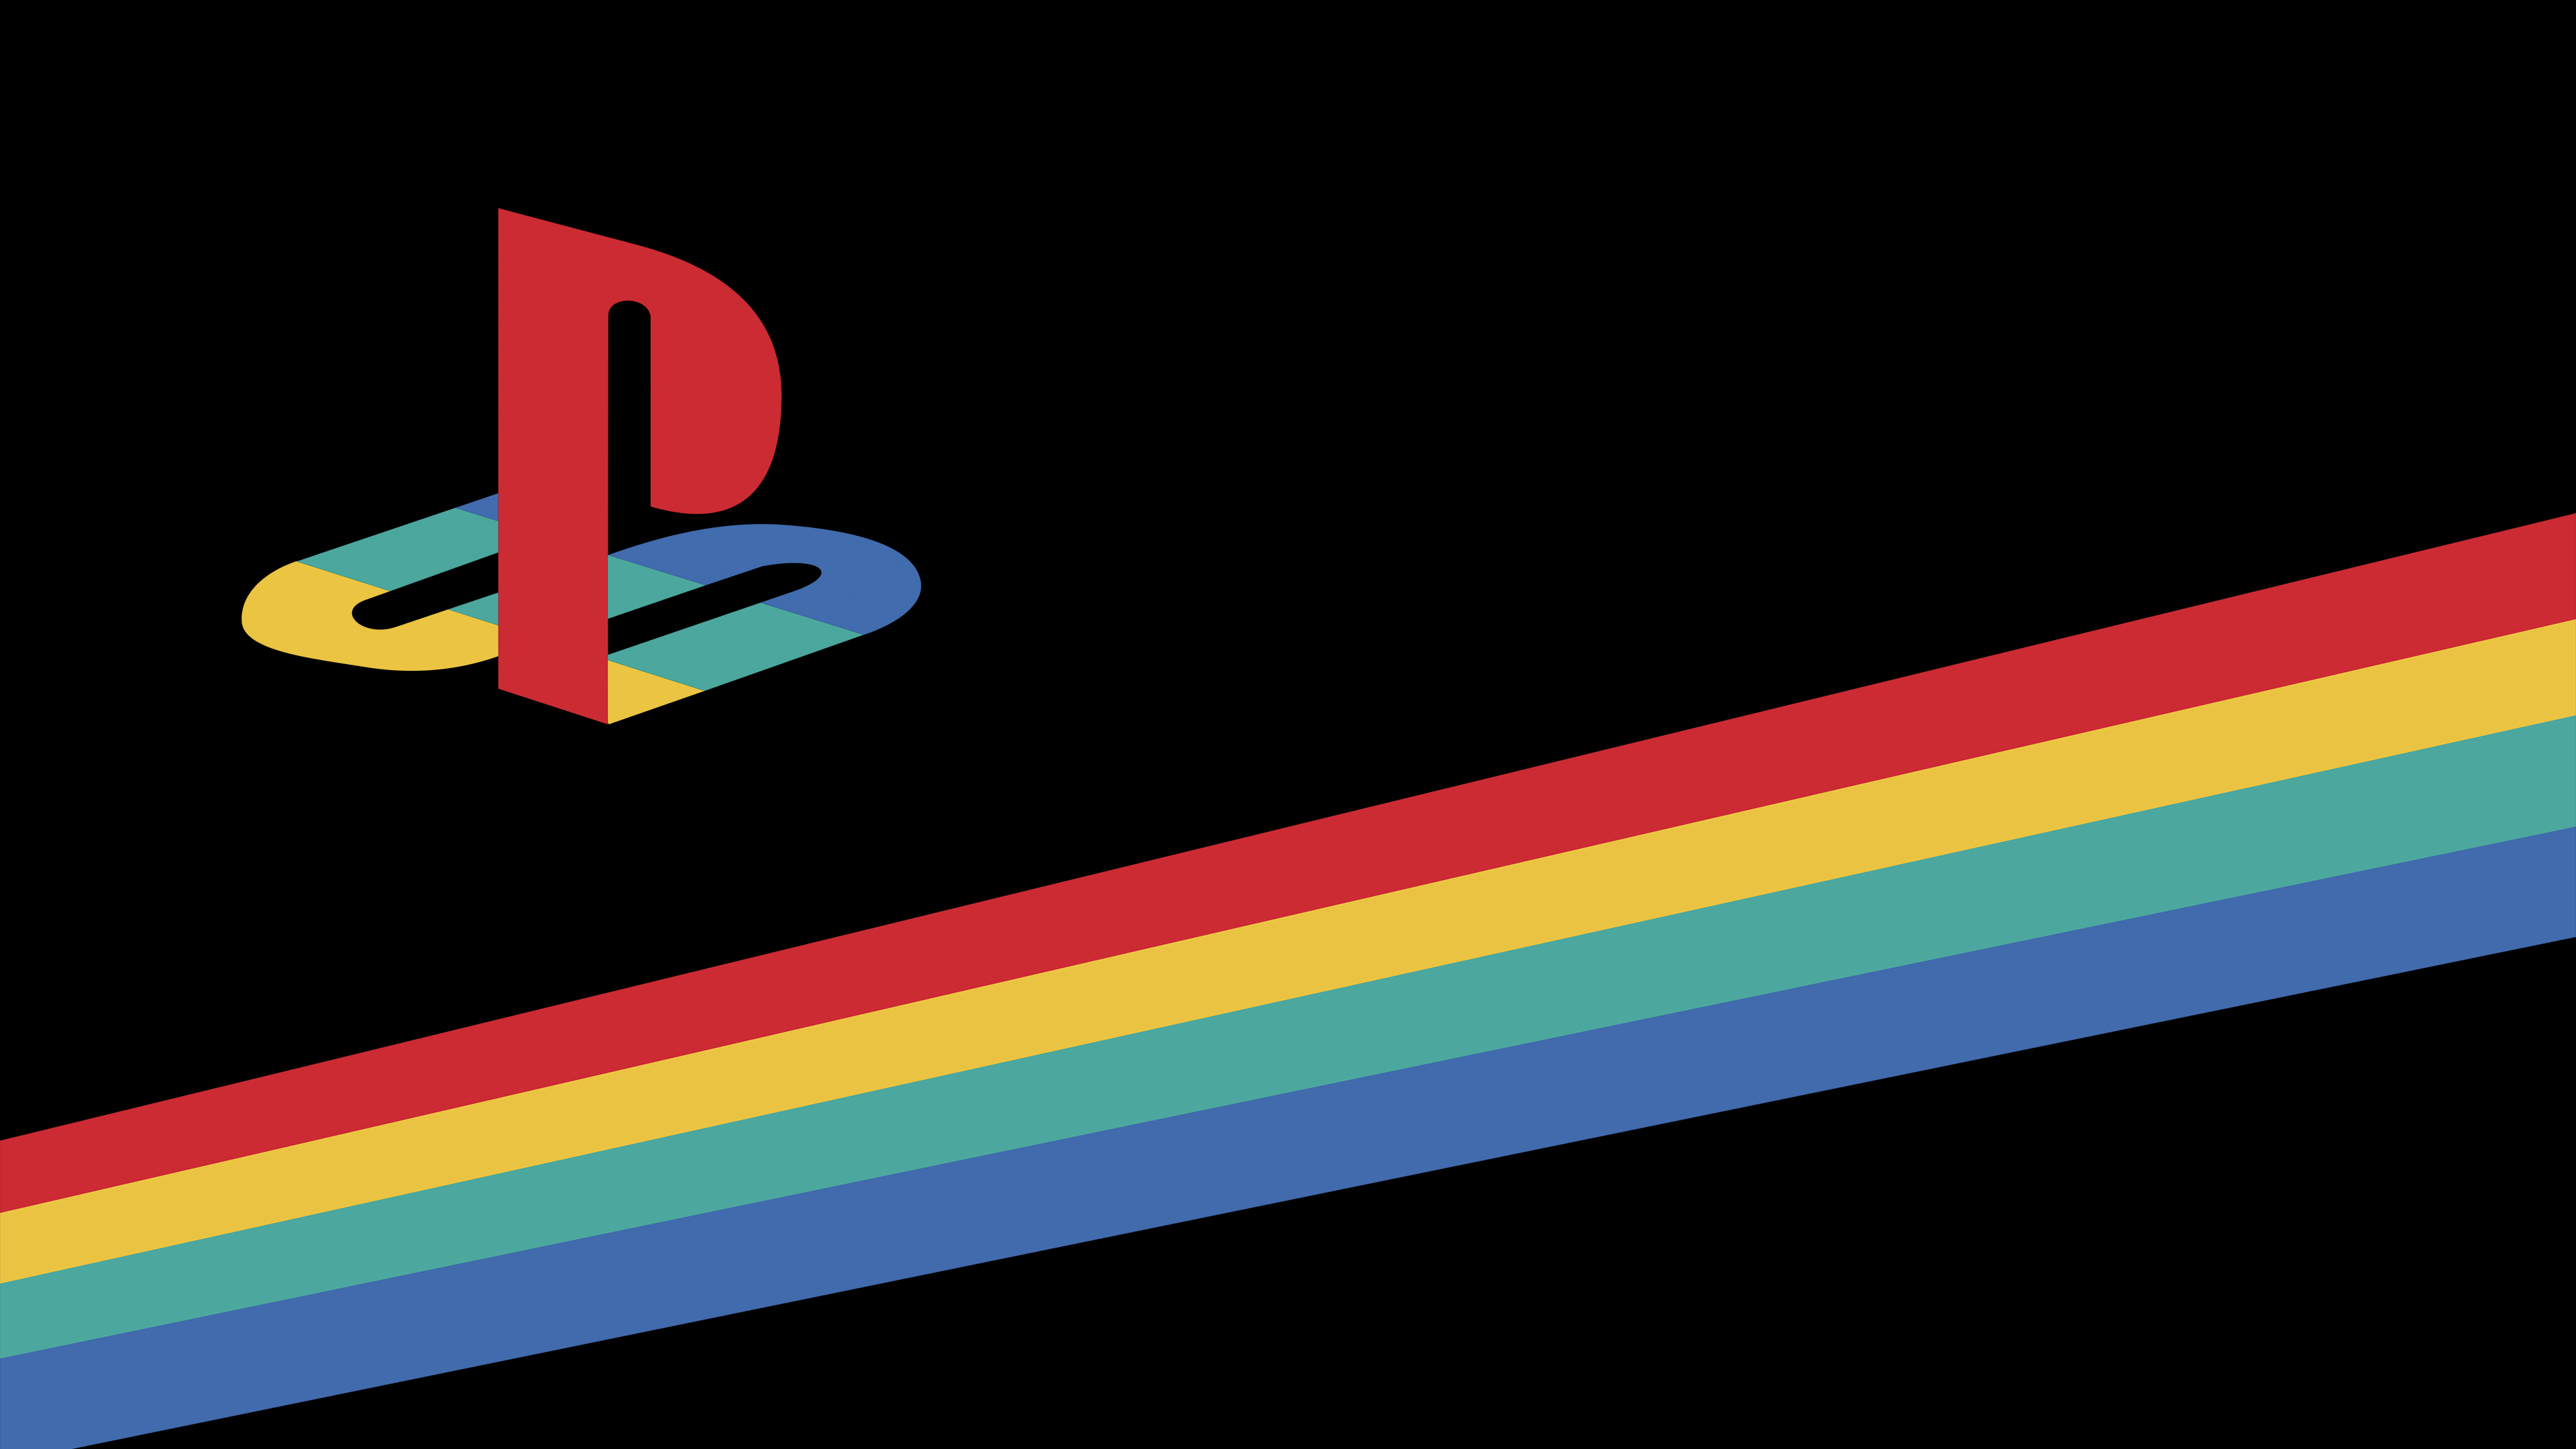 Playstation Minimalist Classic [3840x2160]. Playstation, Playstation logo, Classic wallpaper